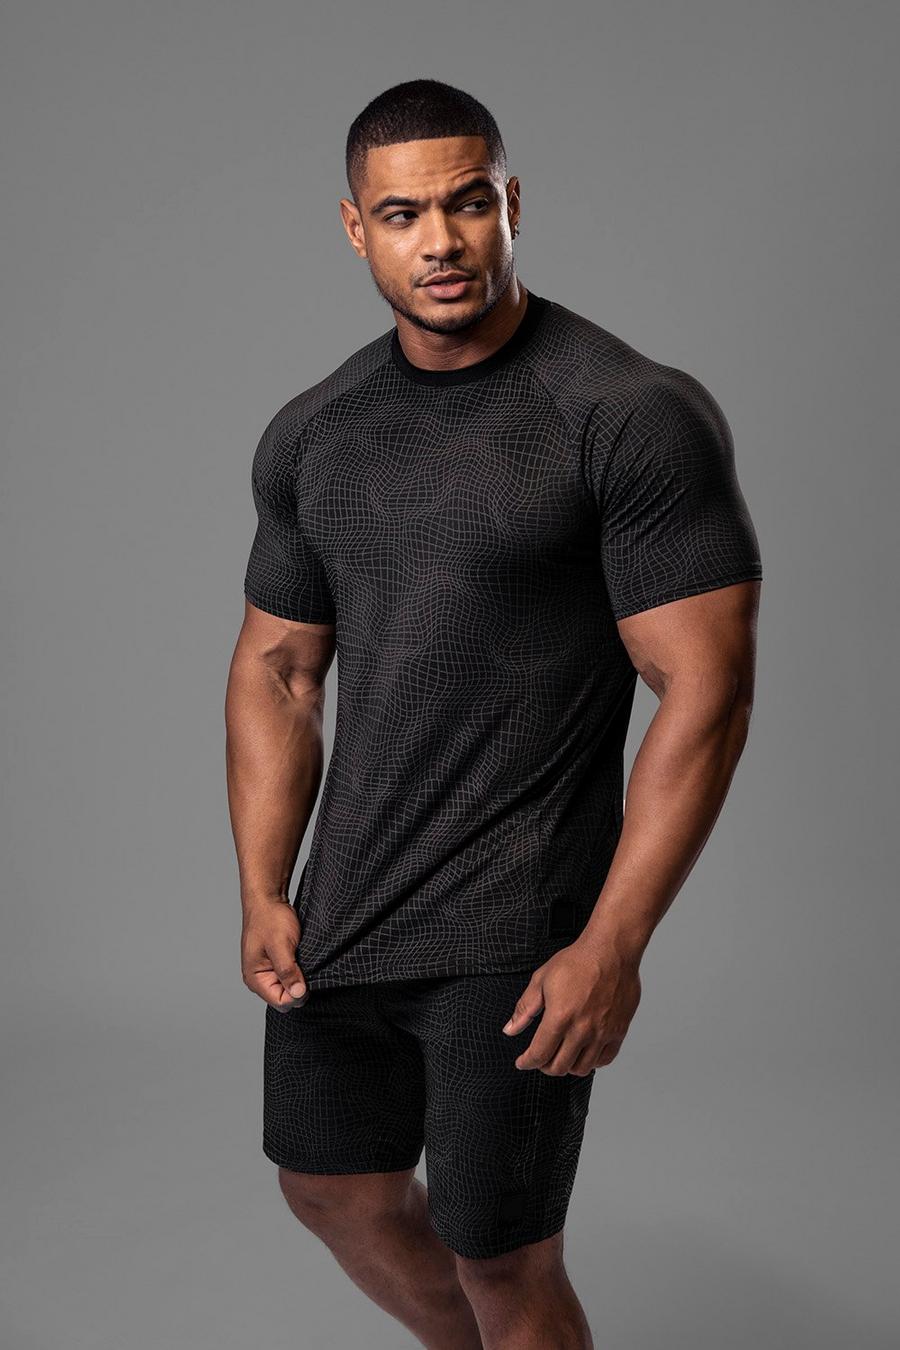 Camiseta MAN Active deportiva con cuadros reflectantes, Black nero